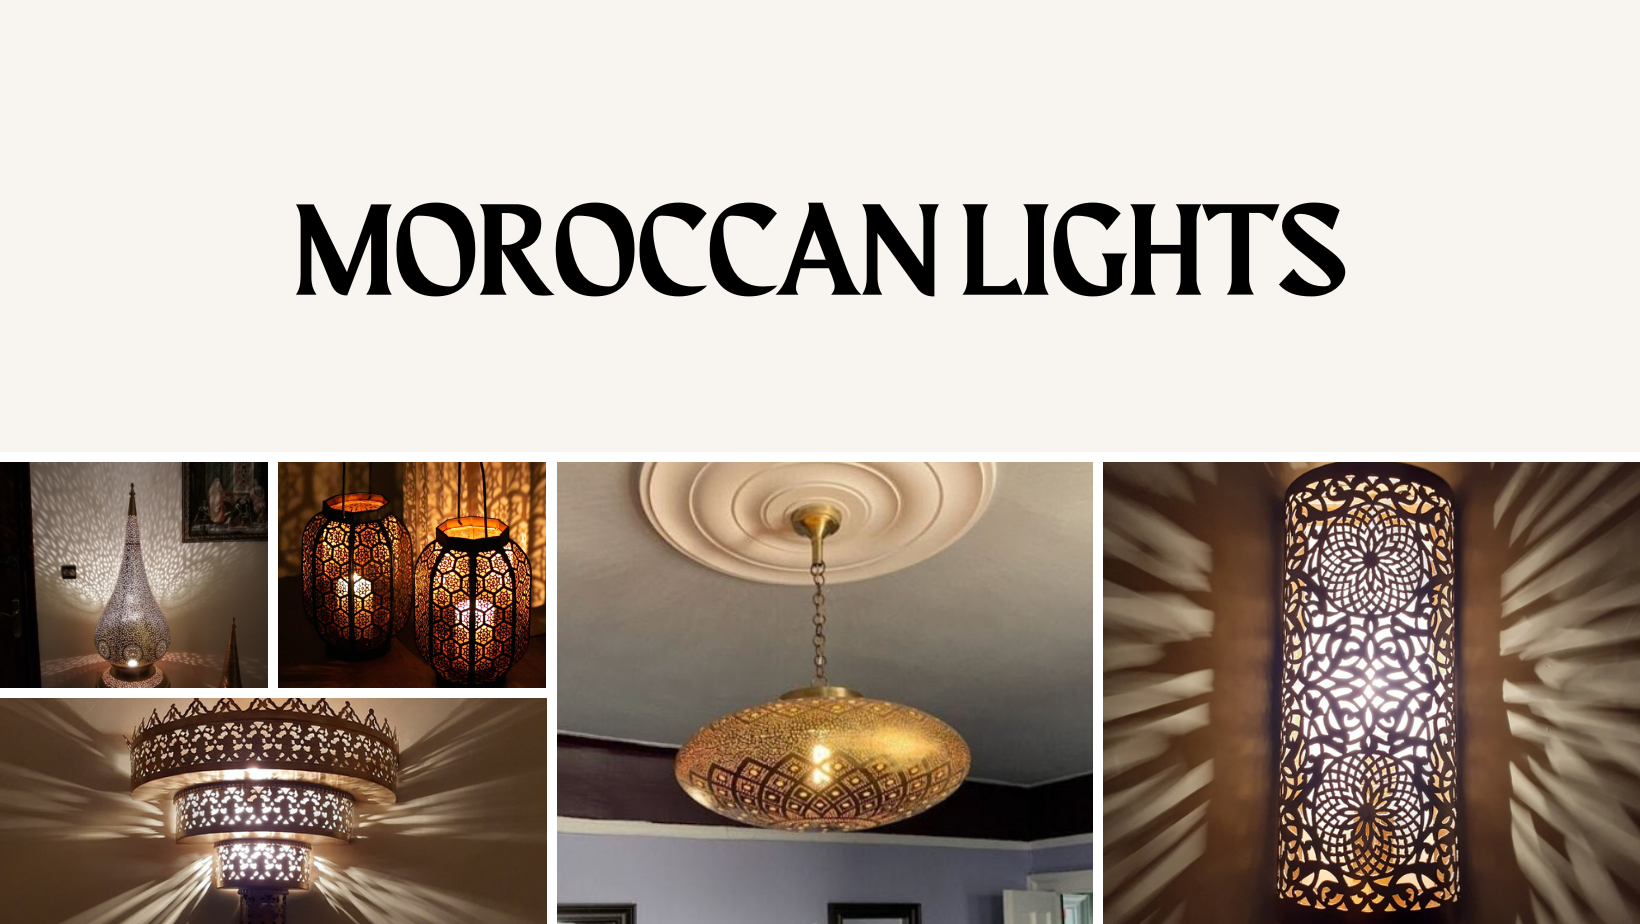 MOROCCAN LIGHTS